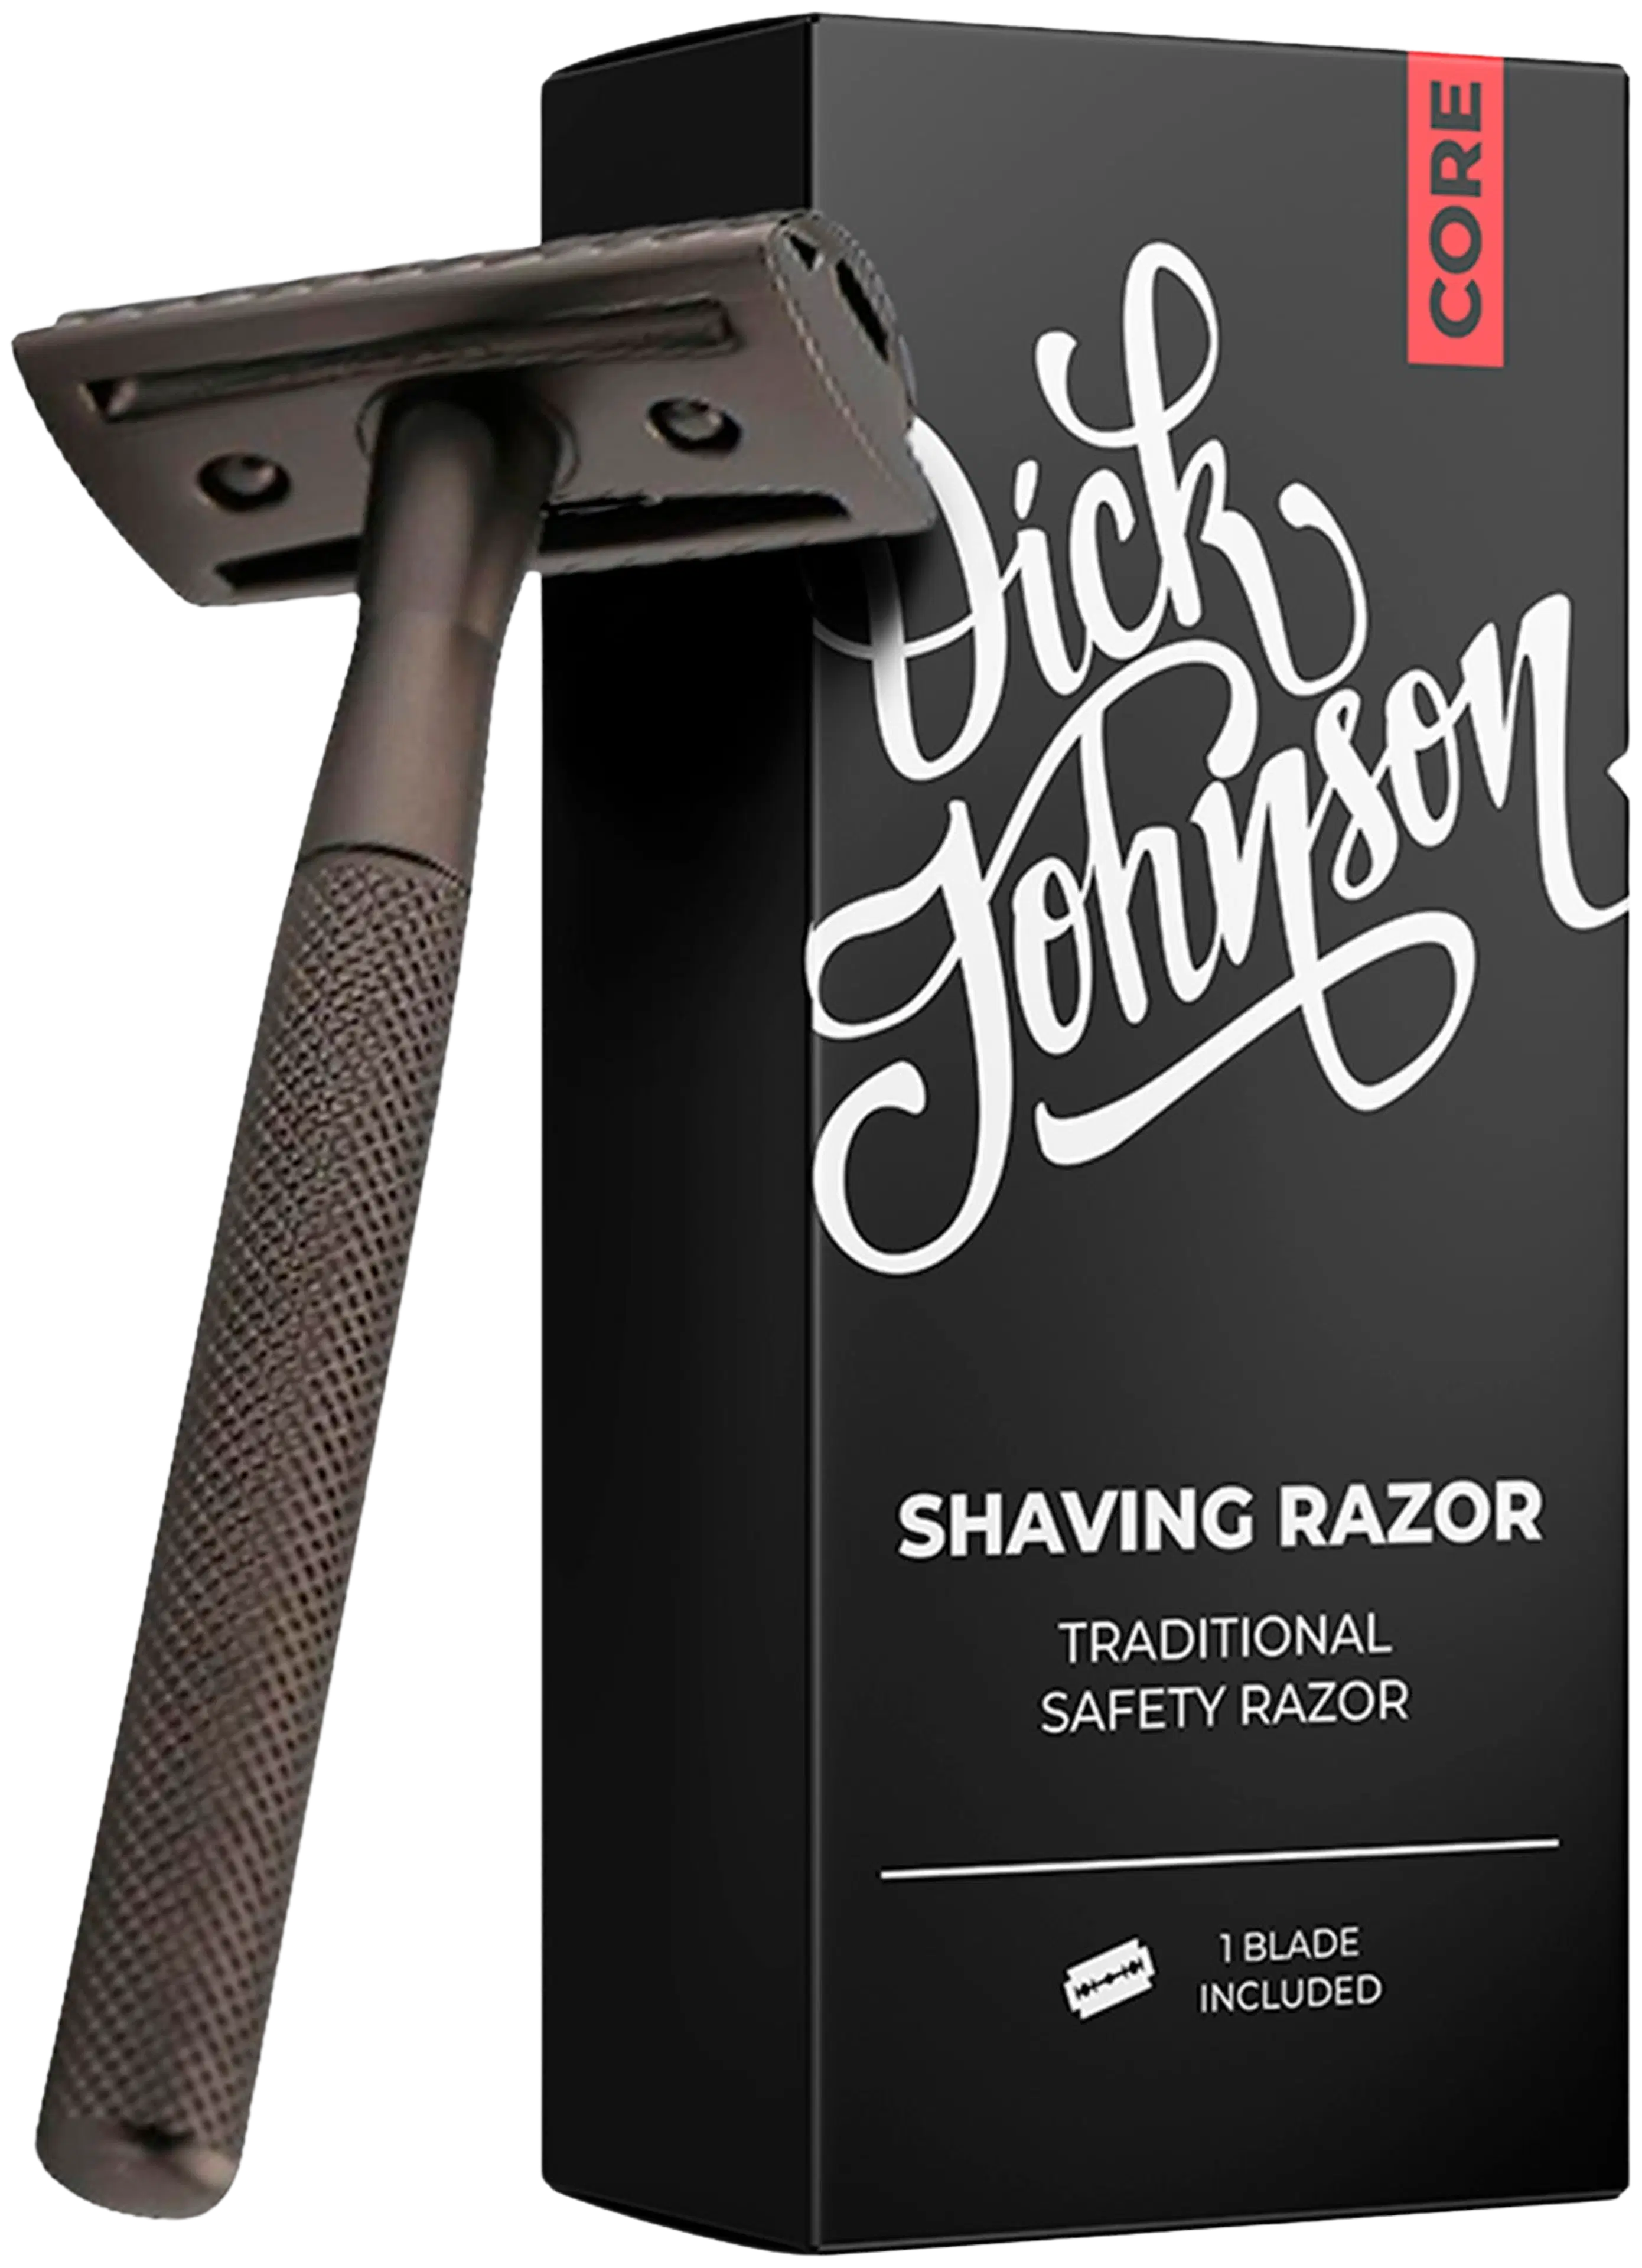 Dick Johnson Core Shaving Razor partahöylä